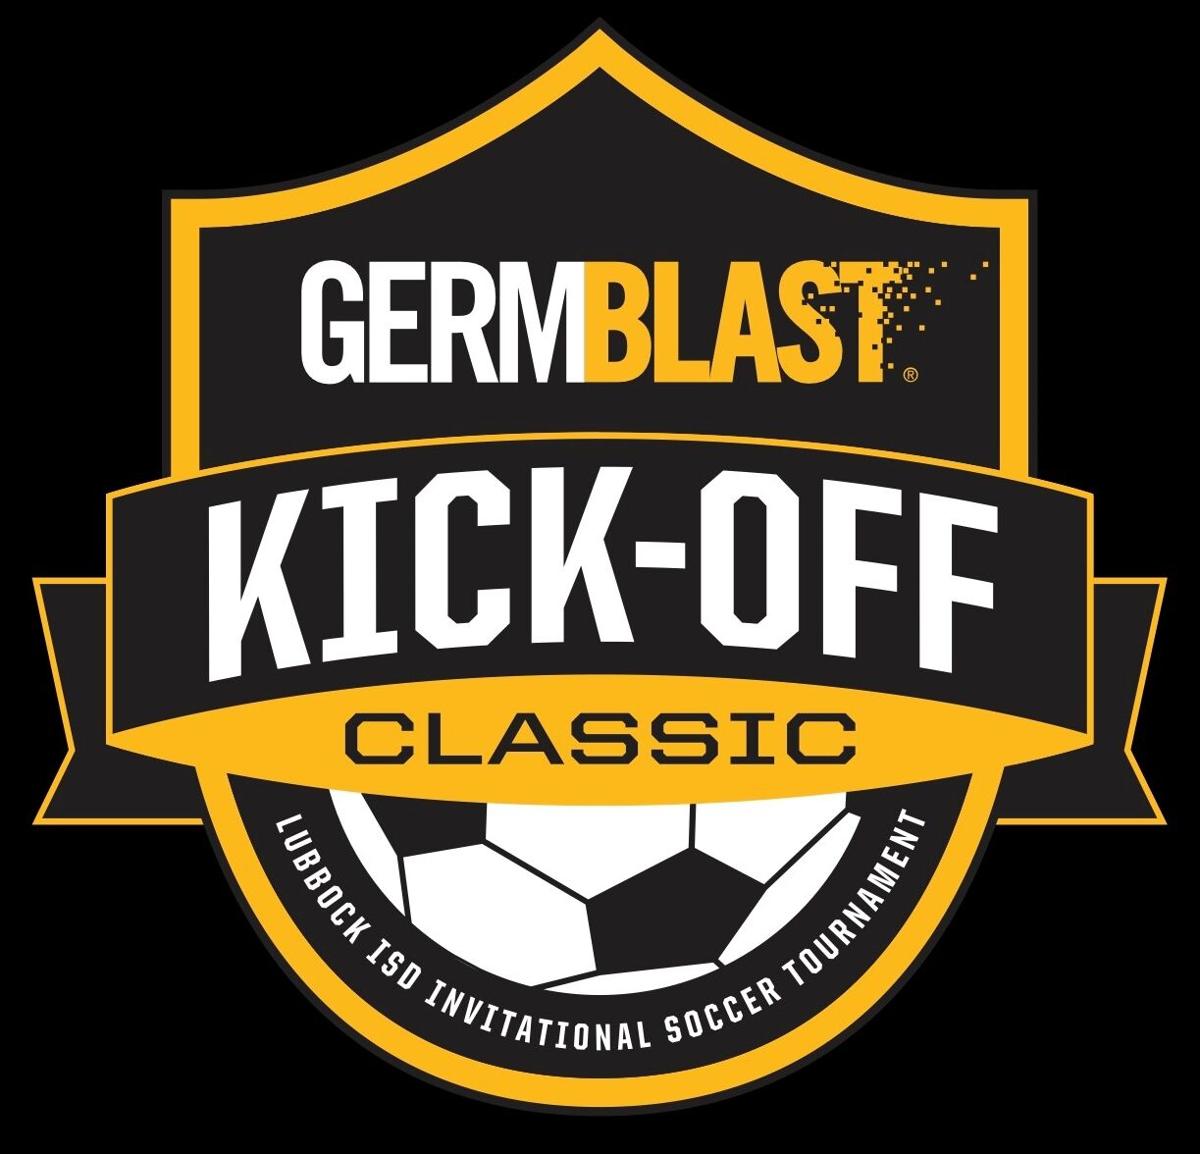 Germblast logo